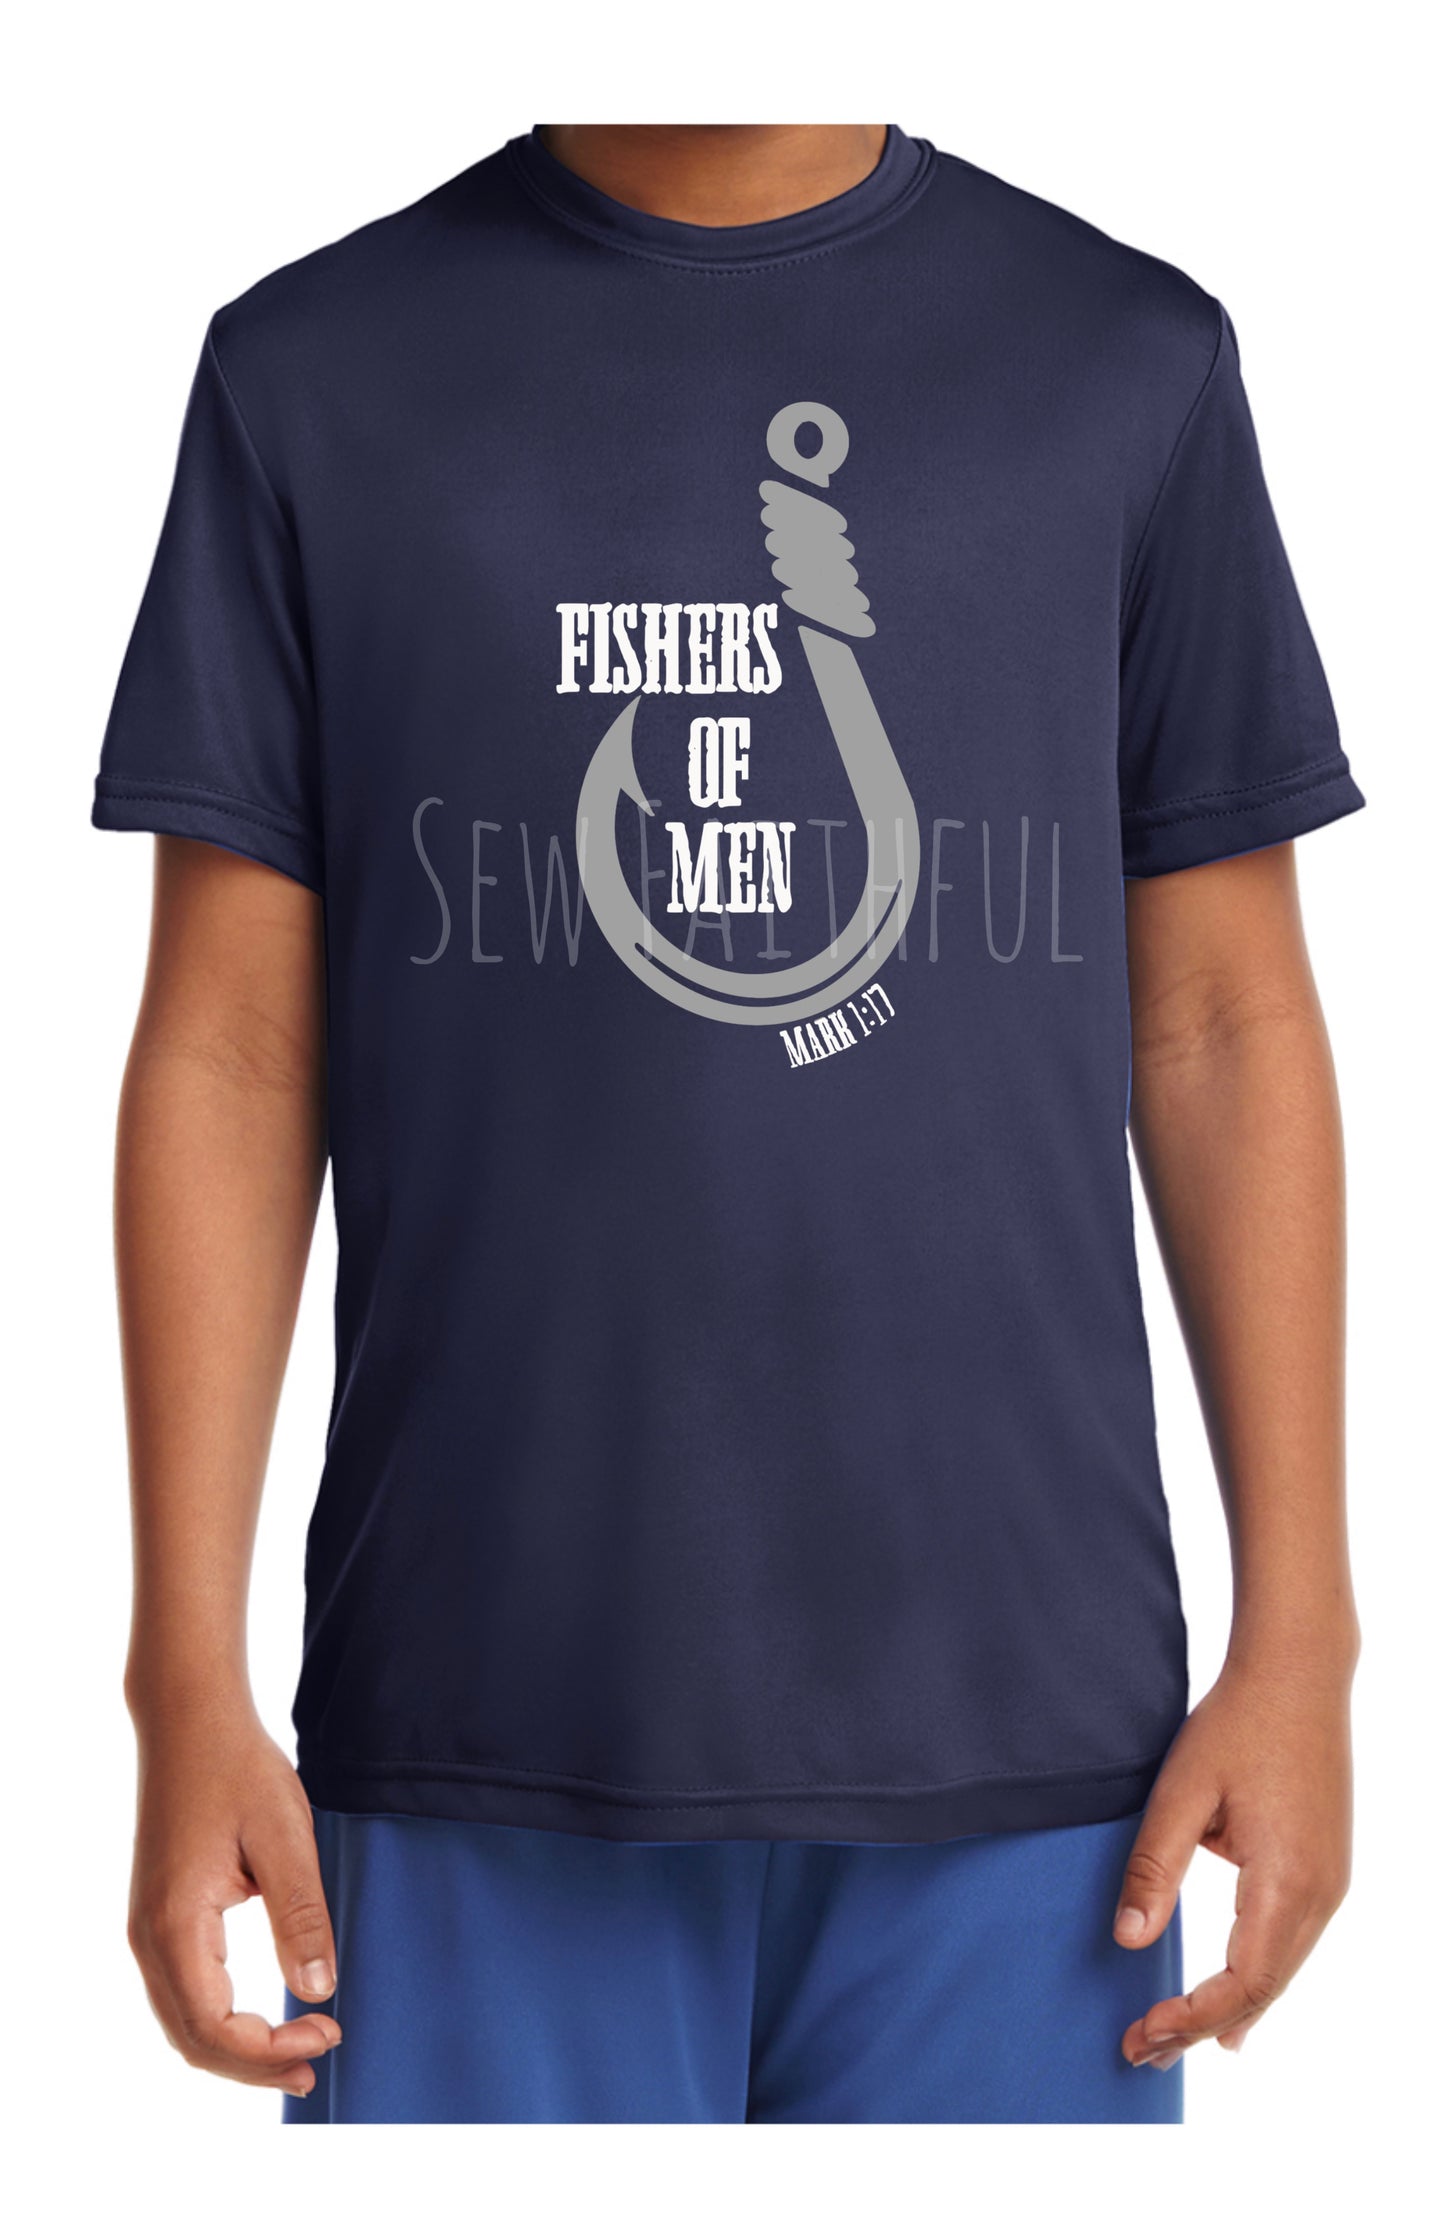 Fishers of Men